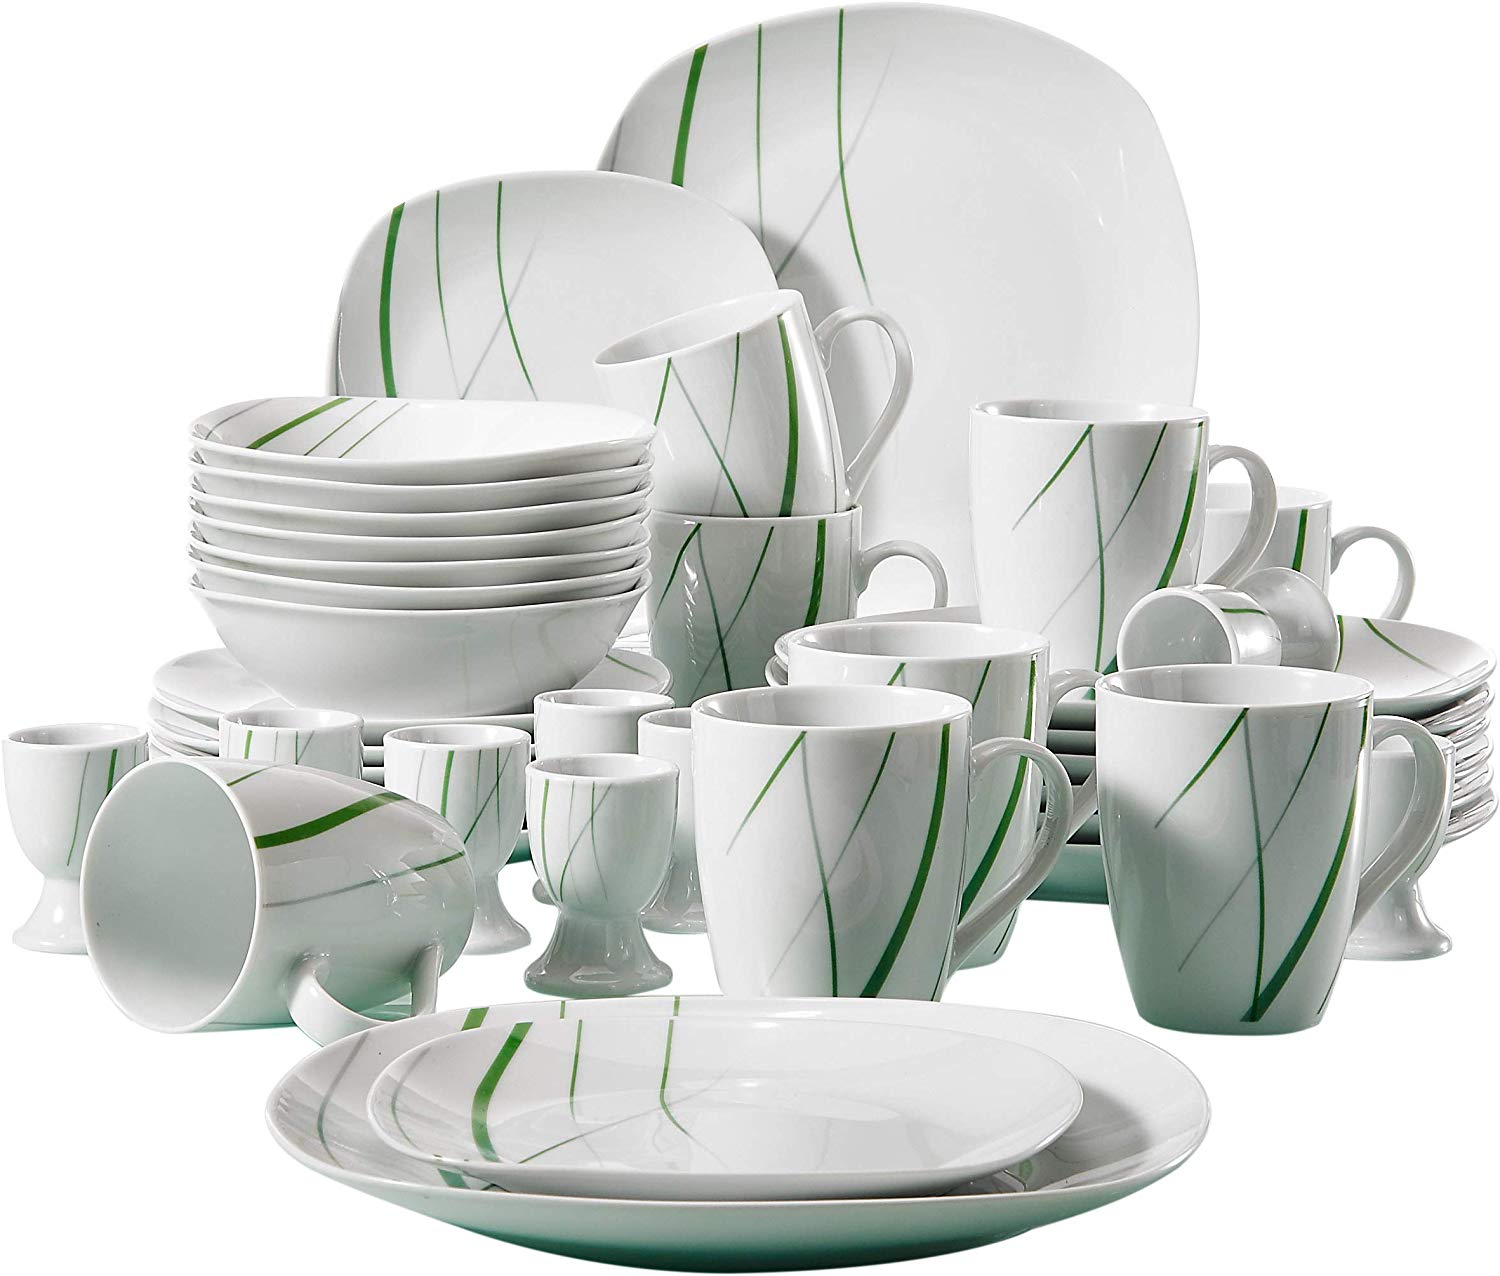 Veweet Aviva Dinner Service Porcelain 18/36 Pieces Crockery Set 20/40 Piece